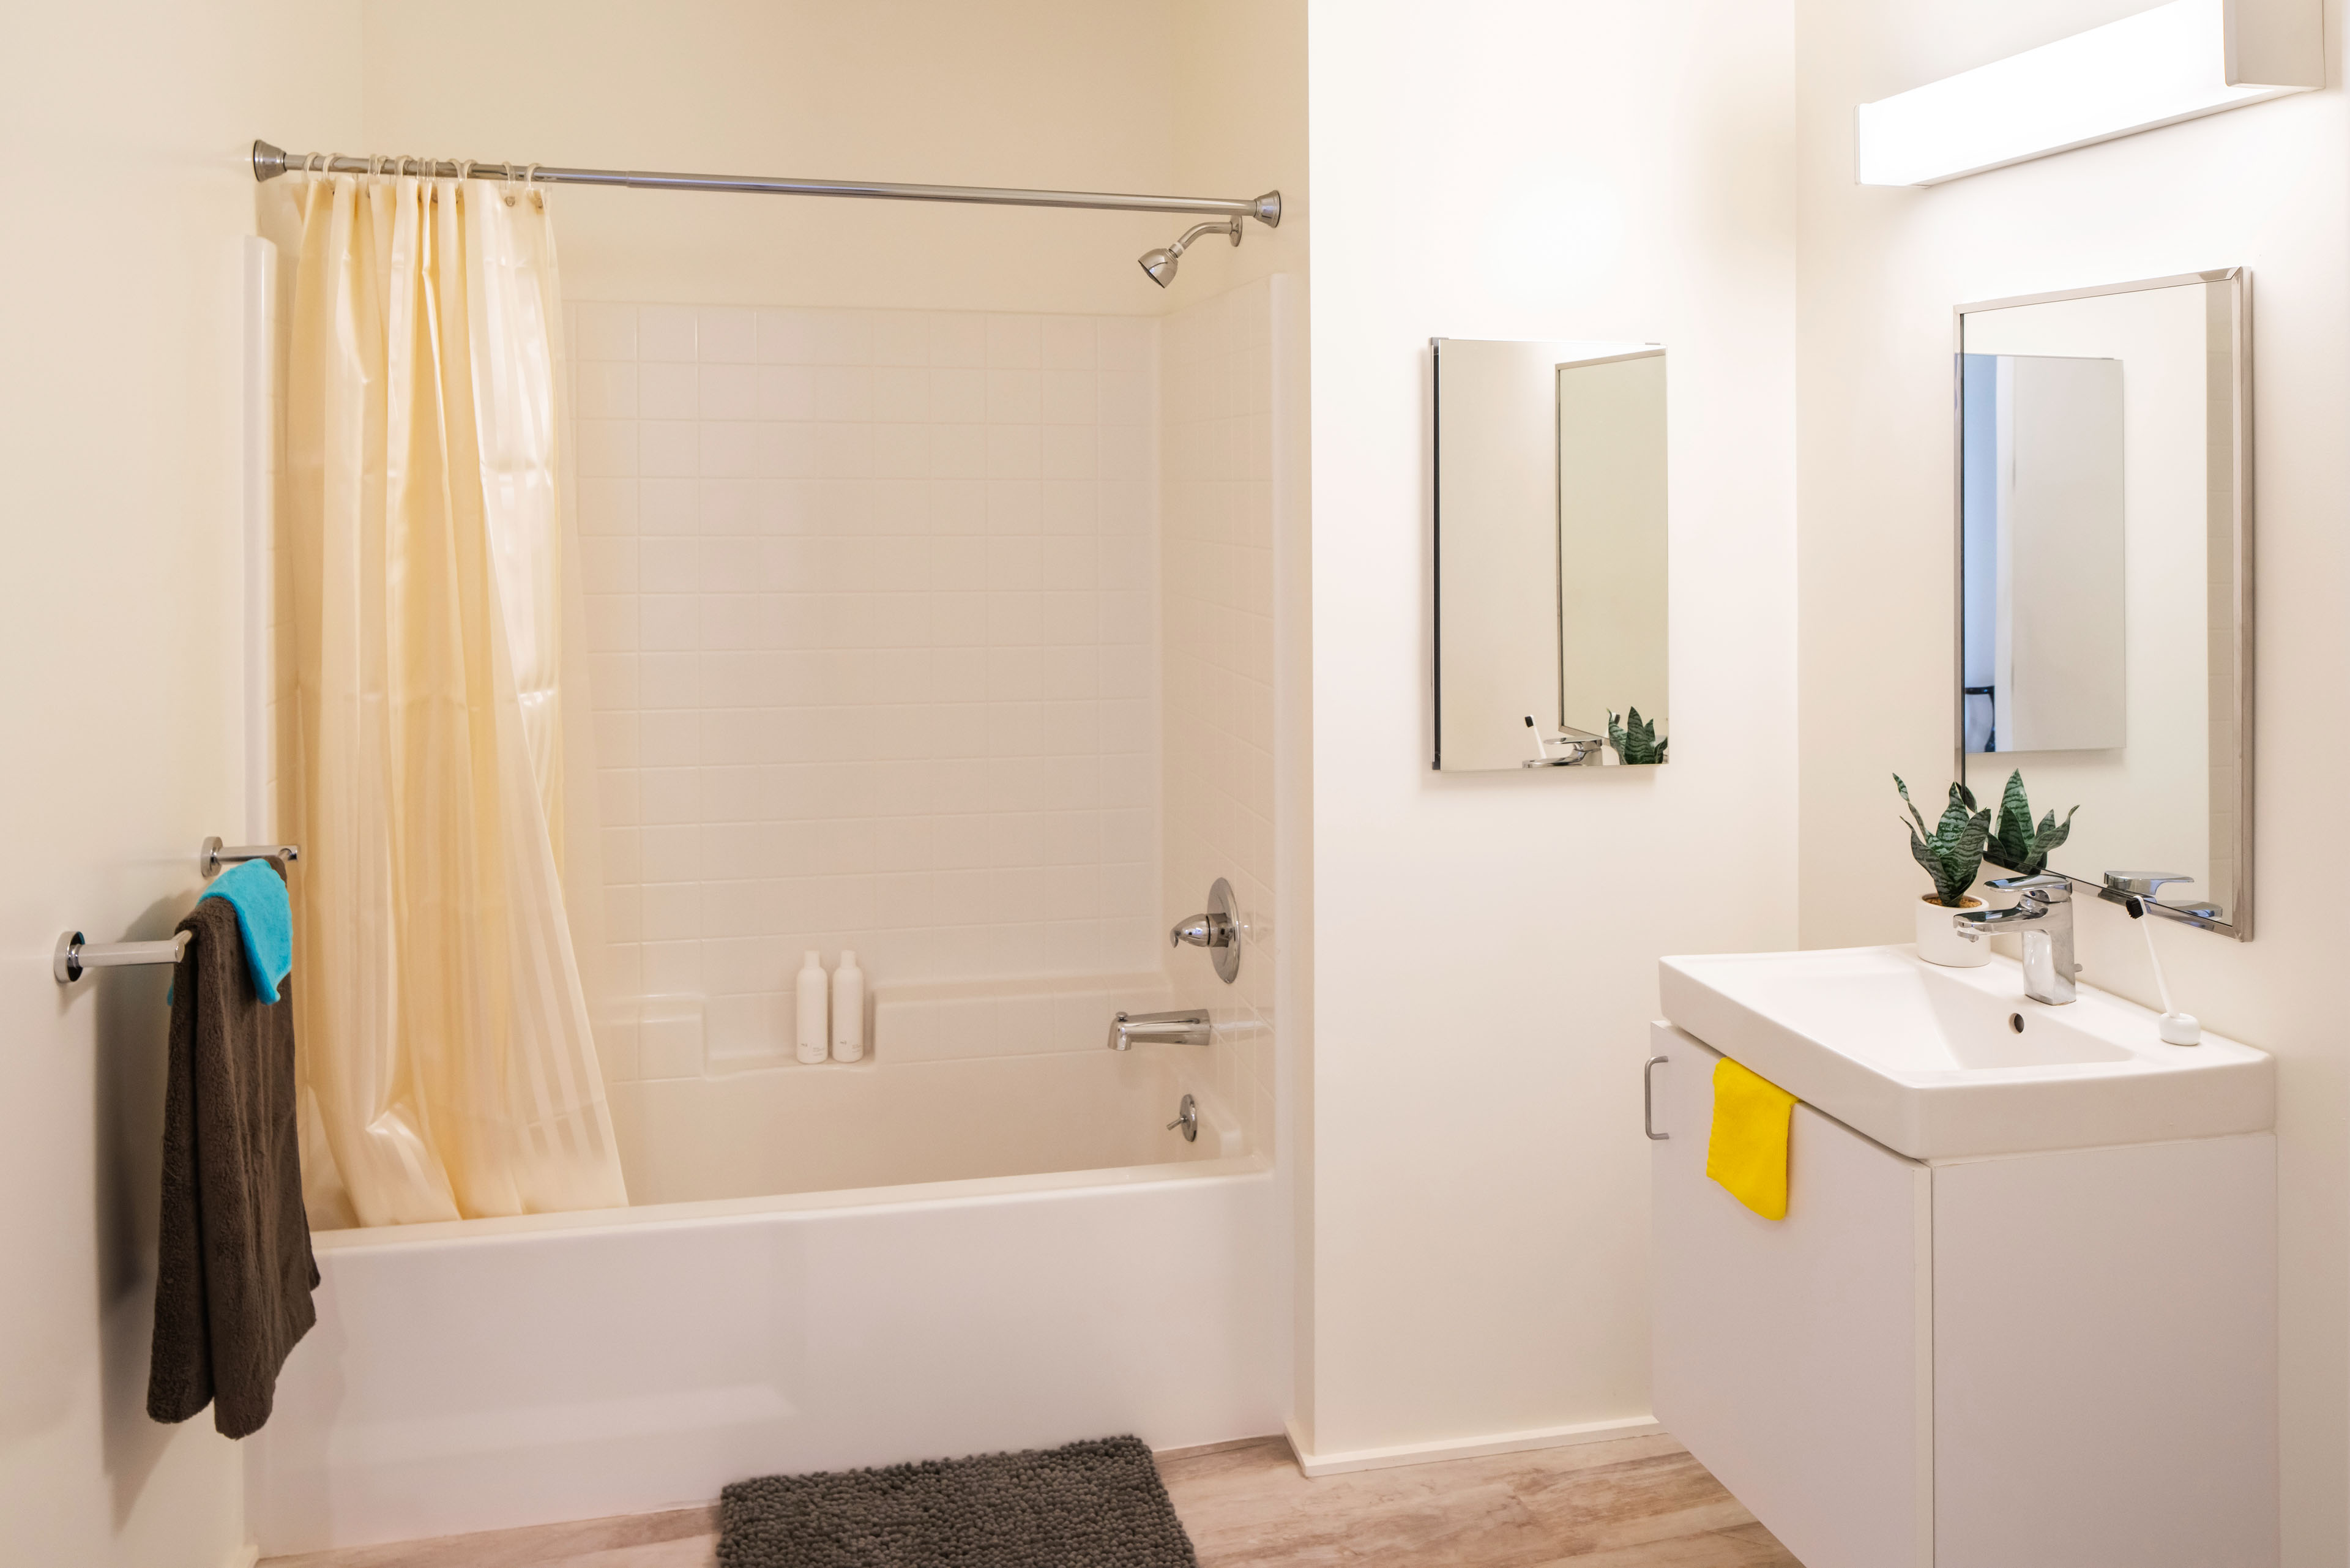 Unit Bathroom - Shower Tub, Sink, Cabinet Under Sink, Medicine Cabinet with Mirror and Additional Side Mirror.